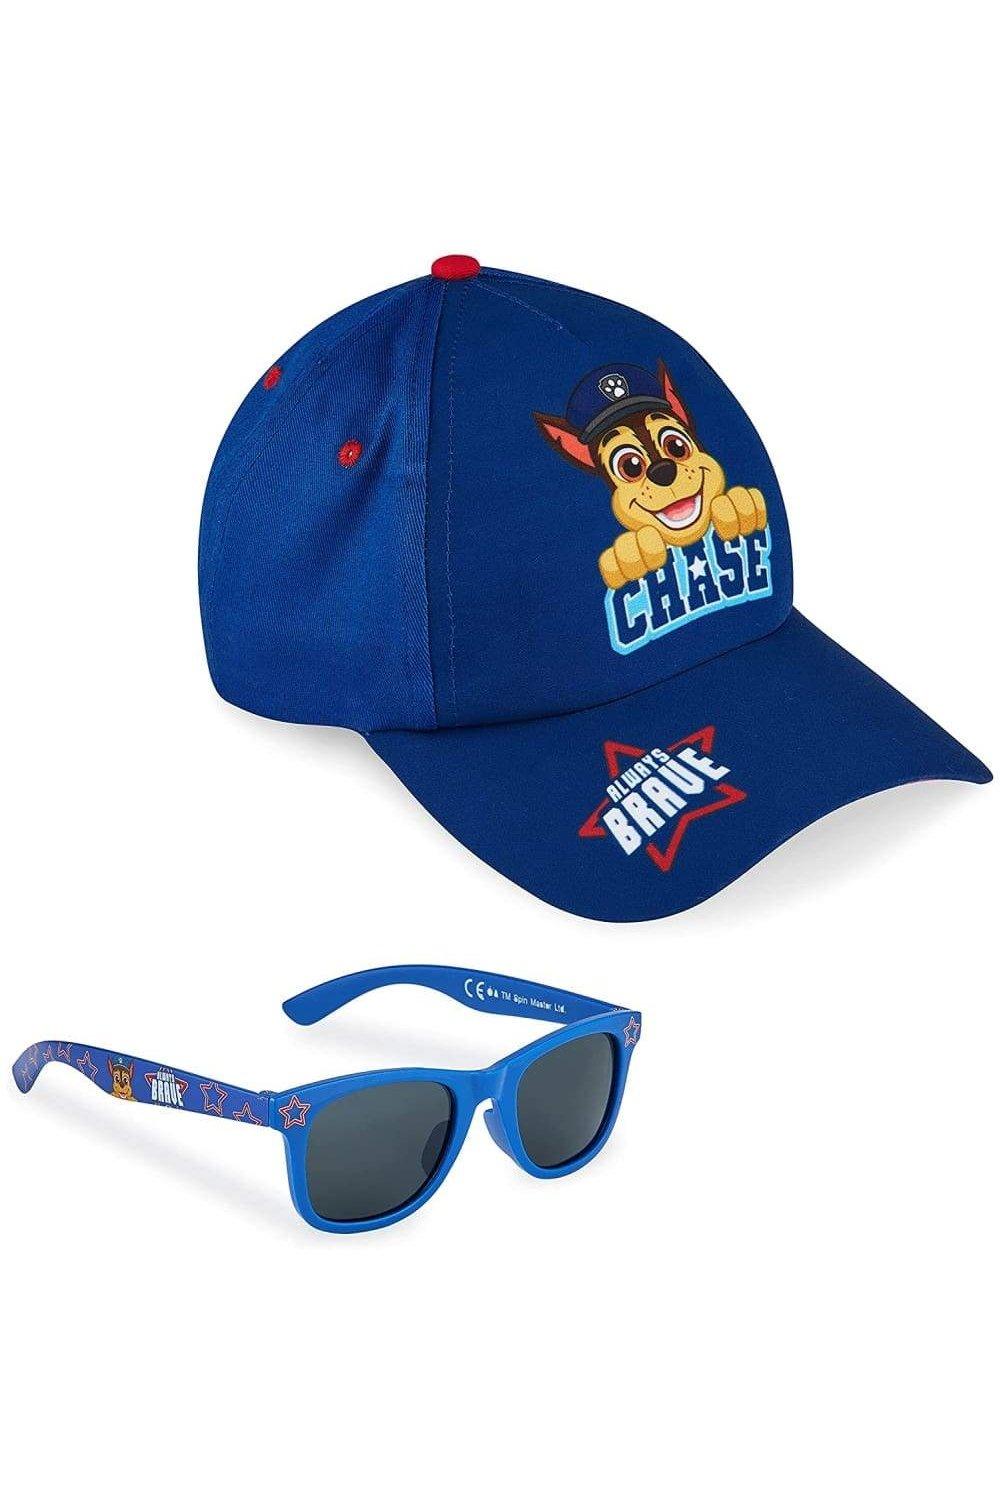 Бейсболка и солнцезащитные очки Chase Paw Patrol, синий солнцезащитные очки ki et la детские diabola